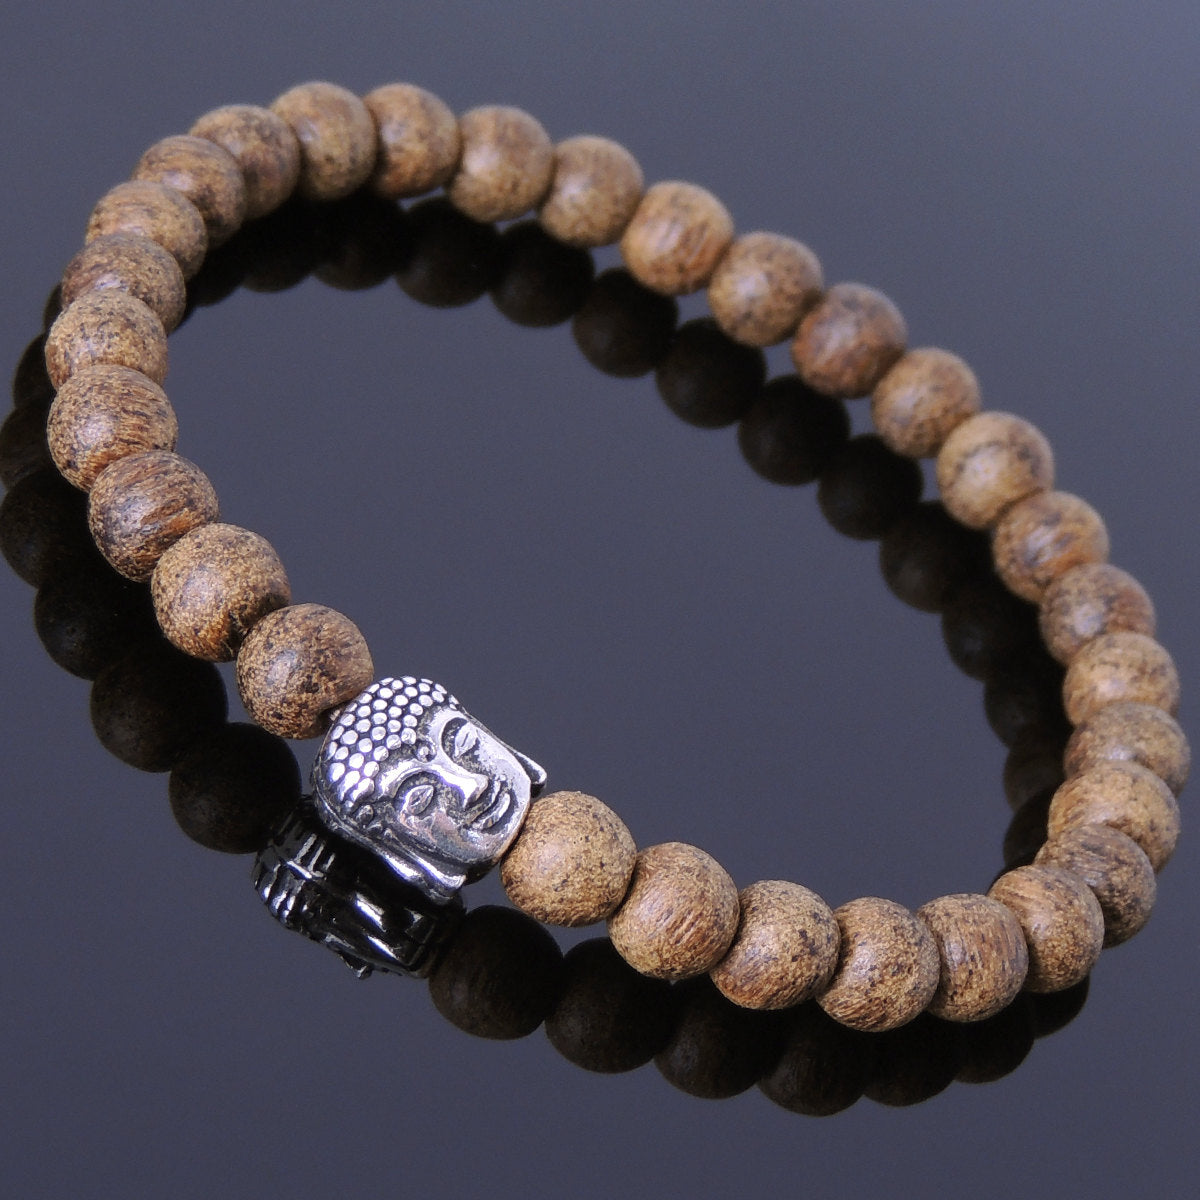 6.5mm Golden Agarwood Meditation Bracelet with S925 Sterling Silver Guanyin Buddha Bead - Handmade by Gem & Silver BR683